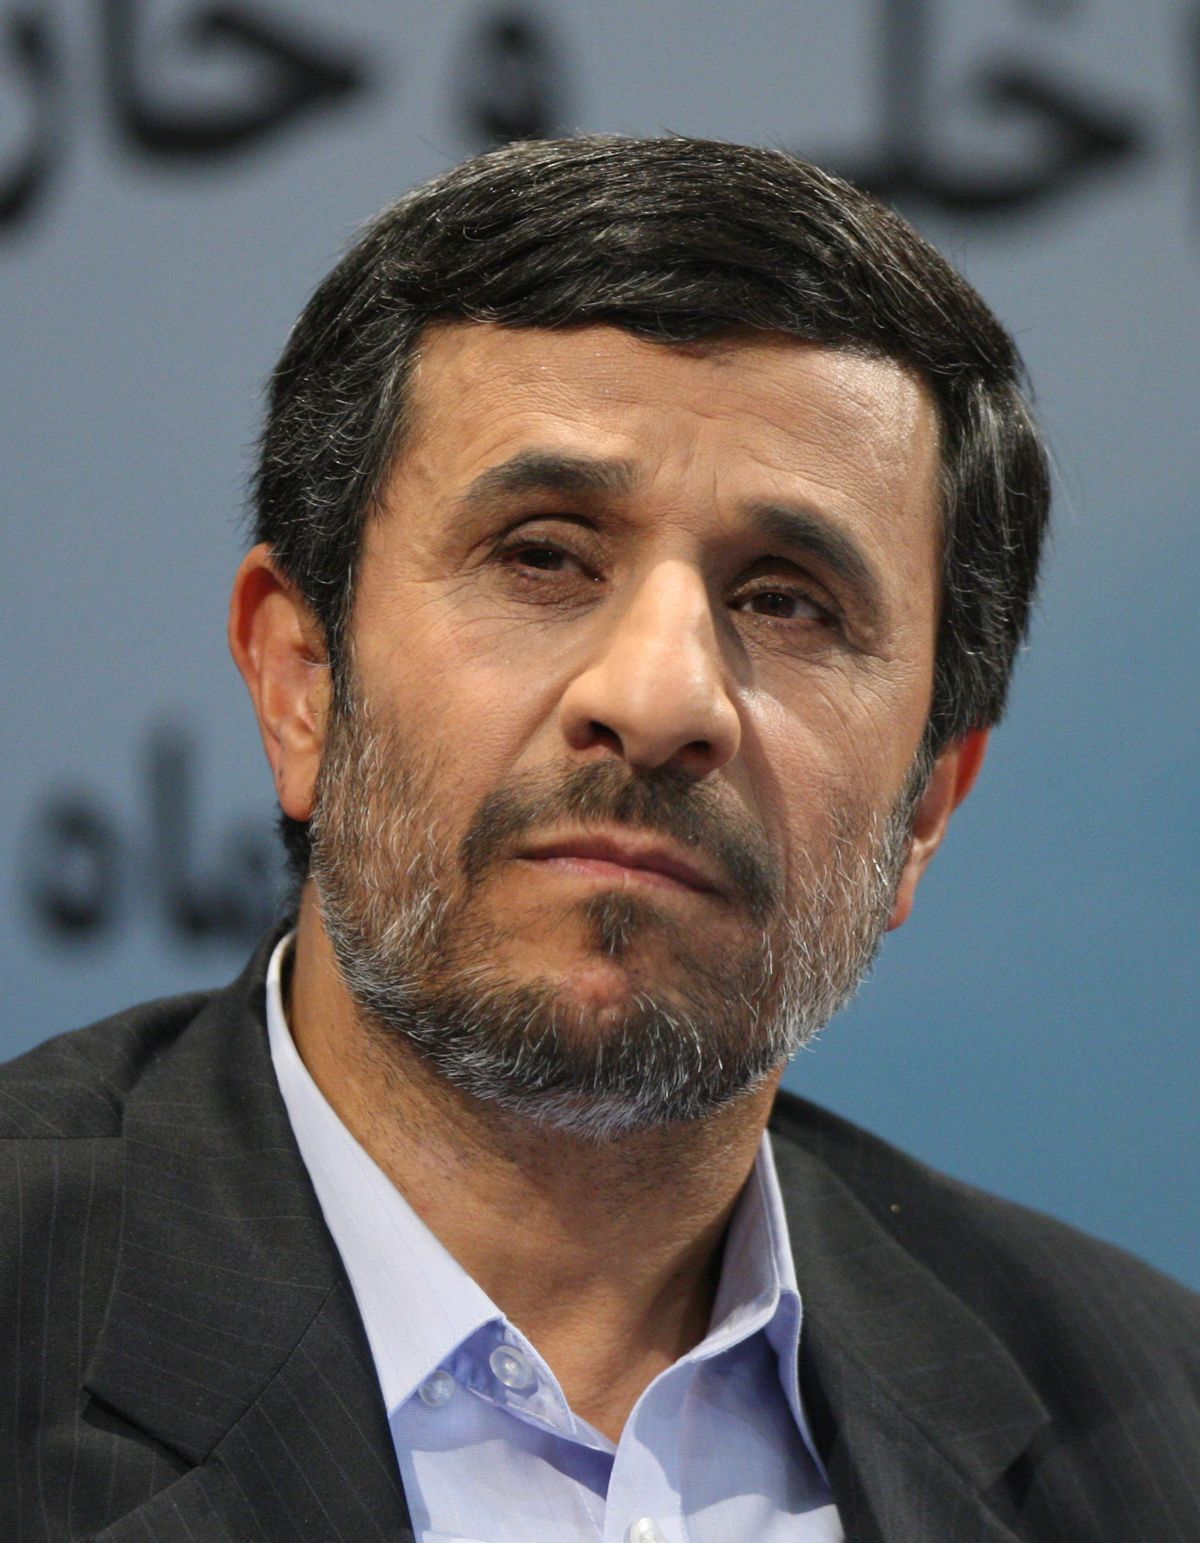 Iranian President Mahmoud Ahmadinejad listens to a question during his press conference in Tehran, Iran, Monday, Nov. 29, 2010. (AP Photo/Vahid Salemi) (Associated Press)